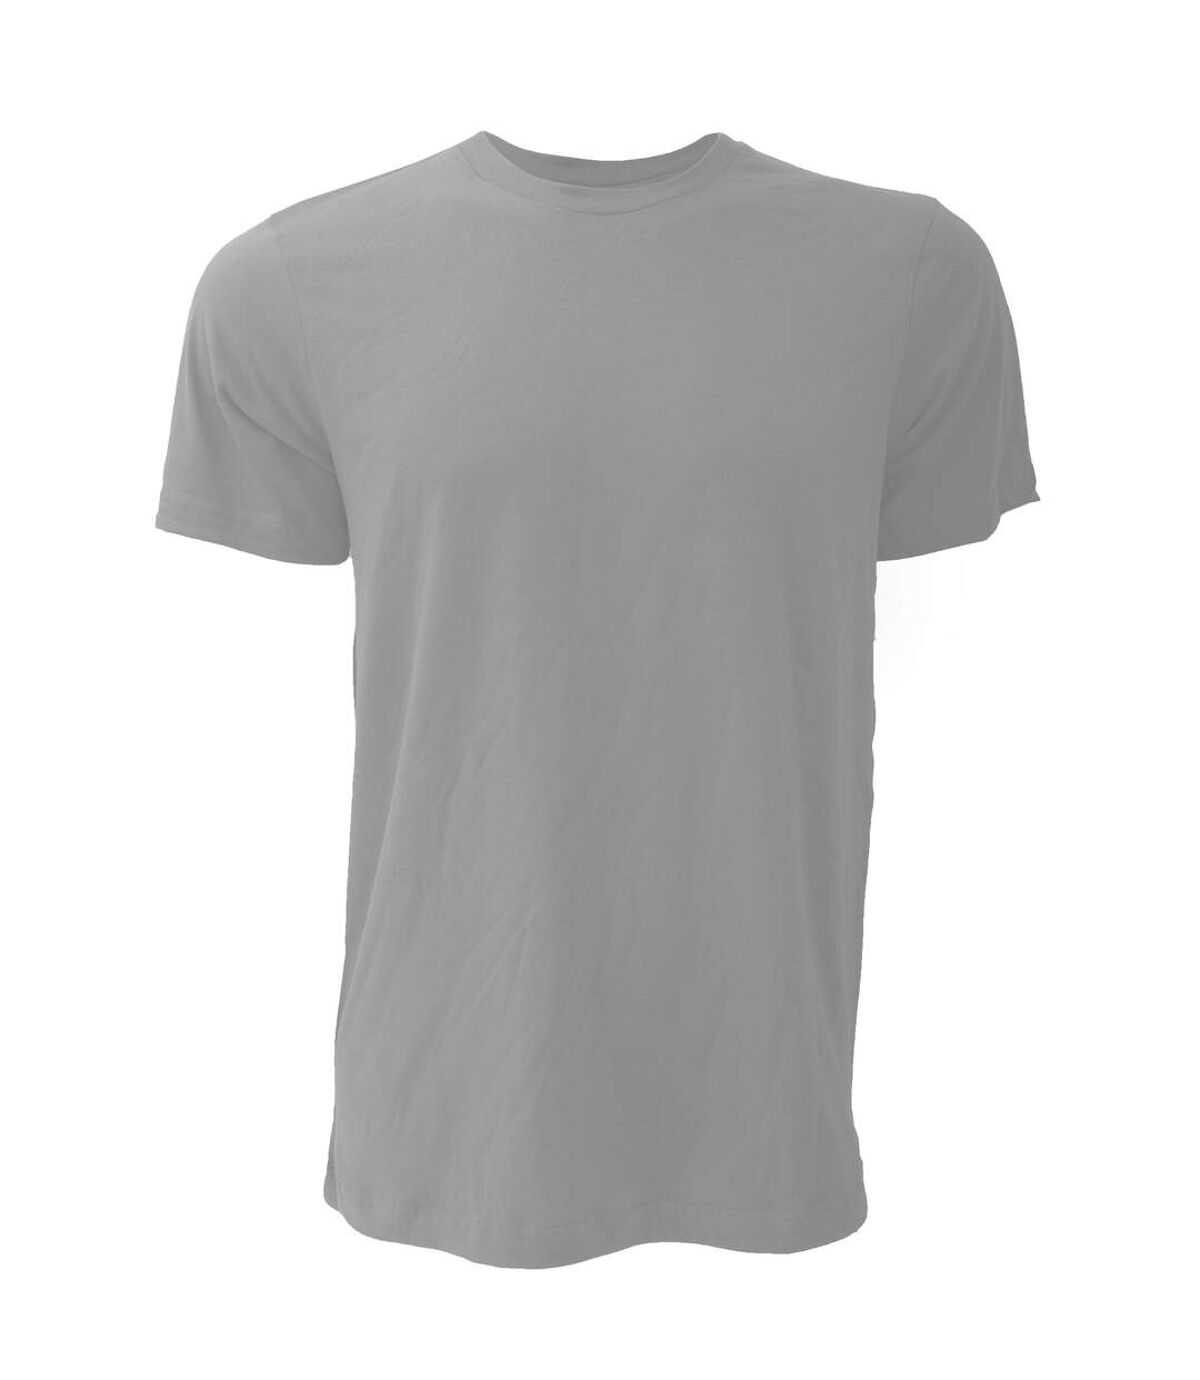 Canvas - T-shirt JERSEY - Hommes (Gris clair) - UTBC163